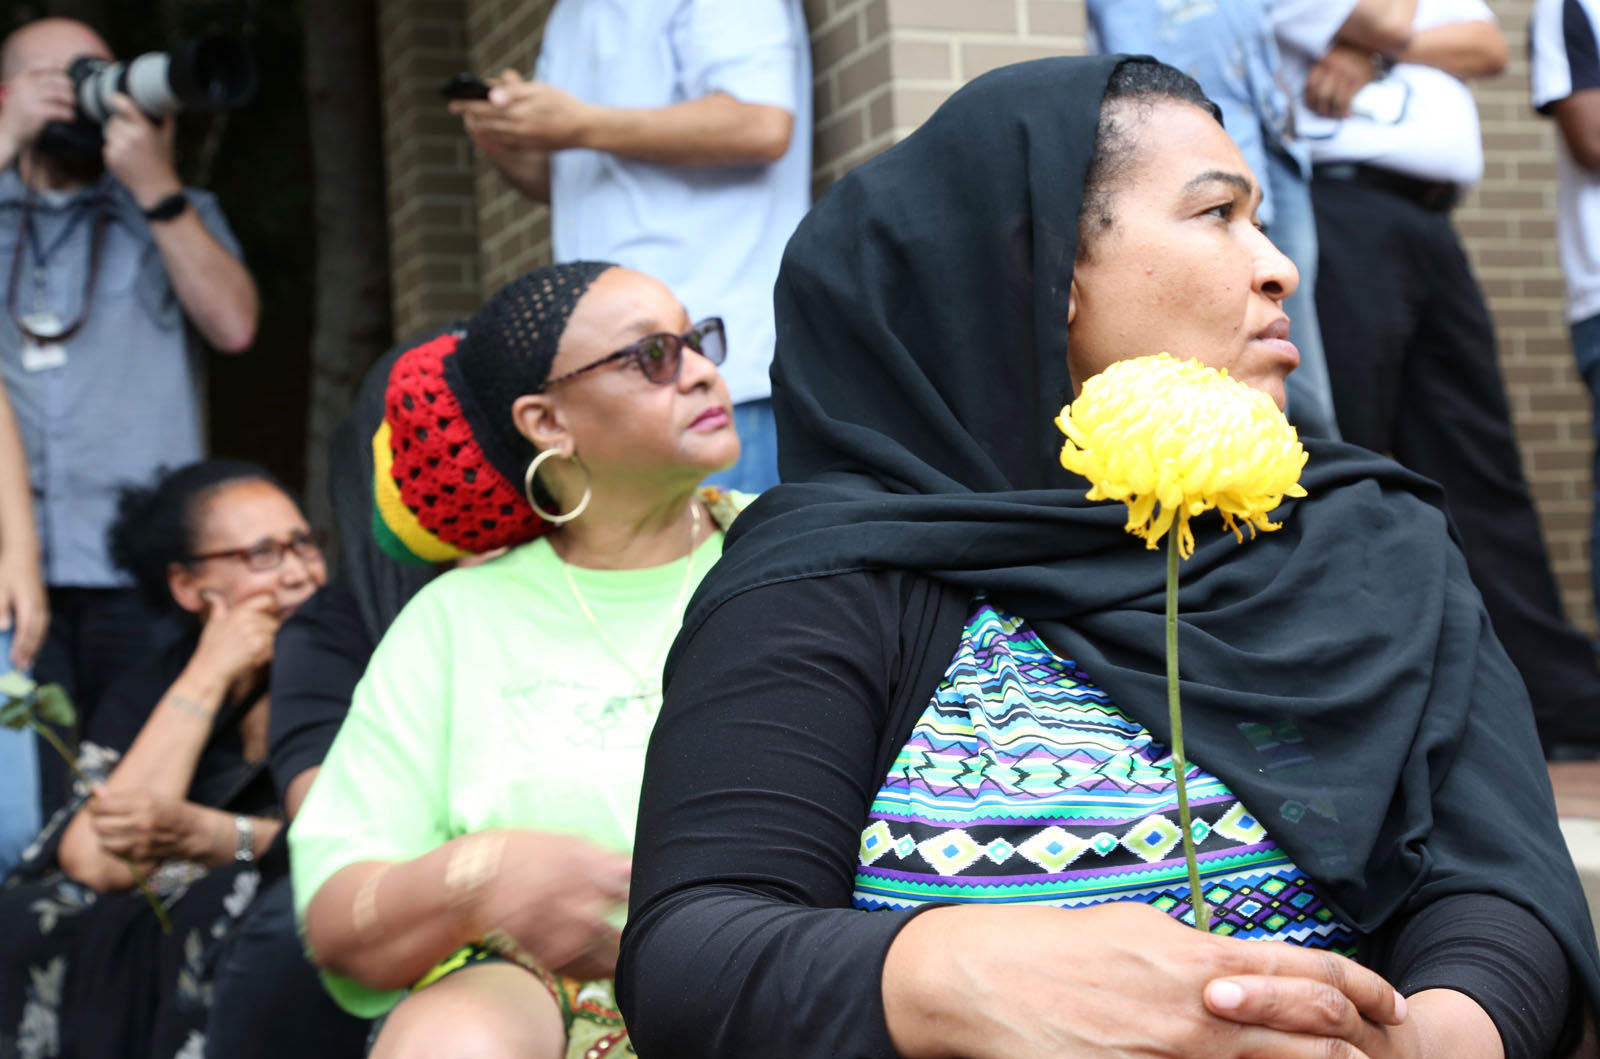 Scenes from the vigil in honor of Nabra Hassanen on Wednesday, June 21, 2017, in Reston, Va. (WTOP/Omama Altaleb)